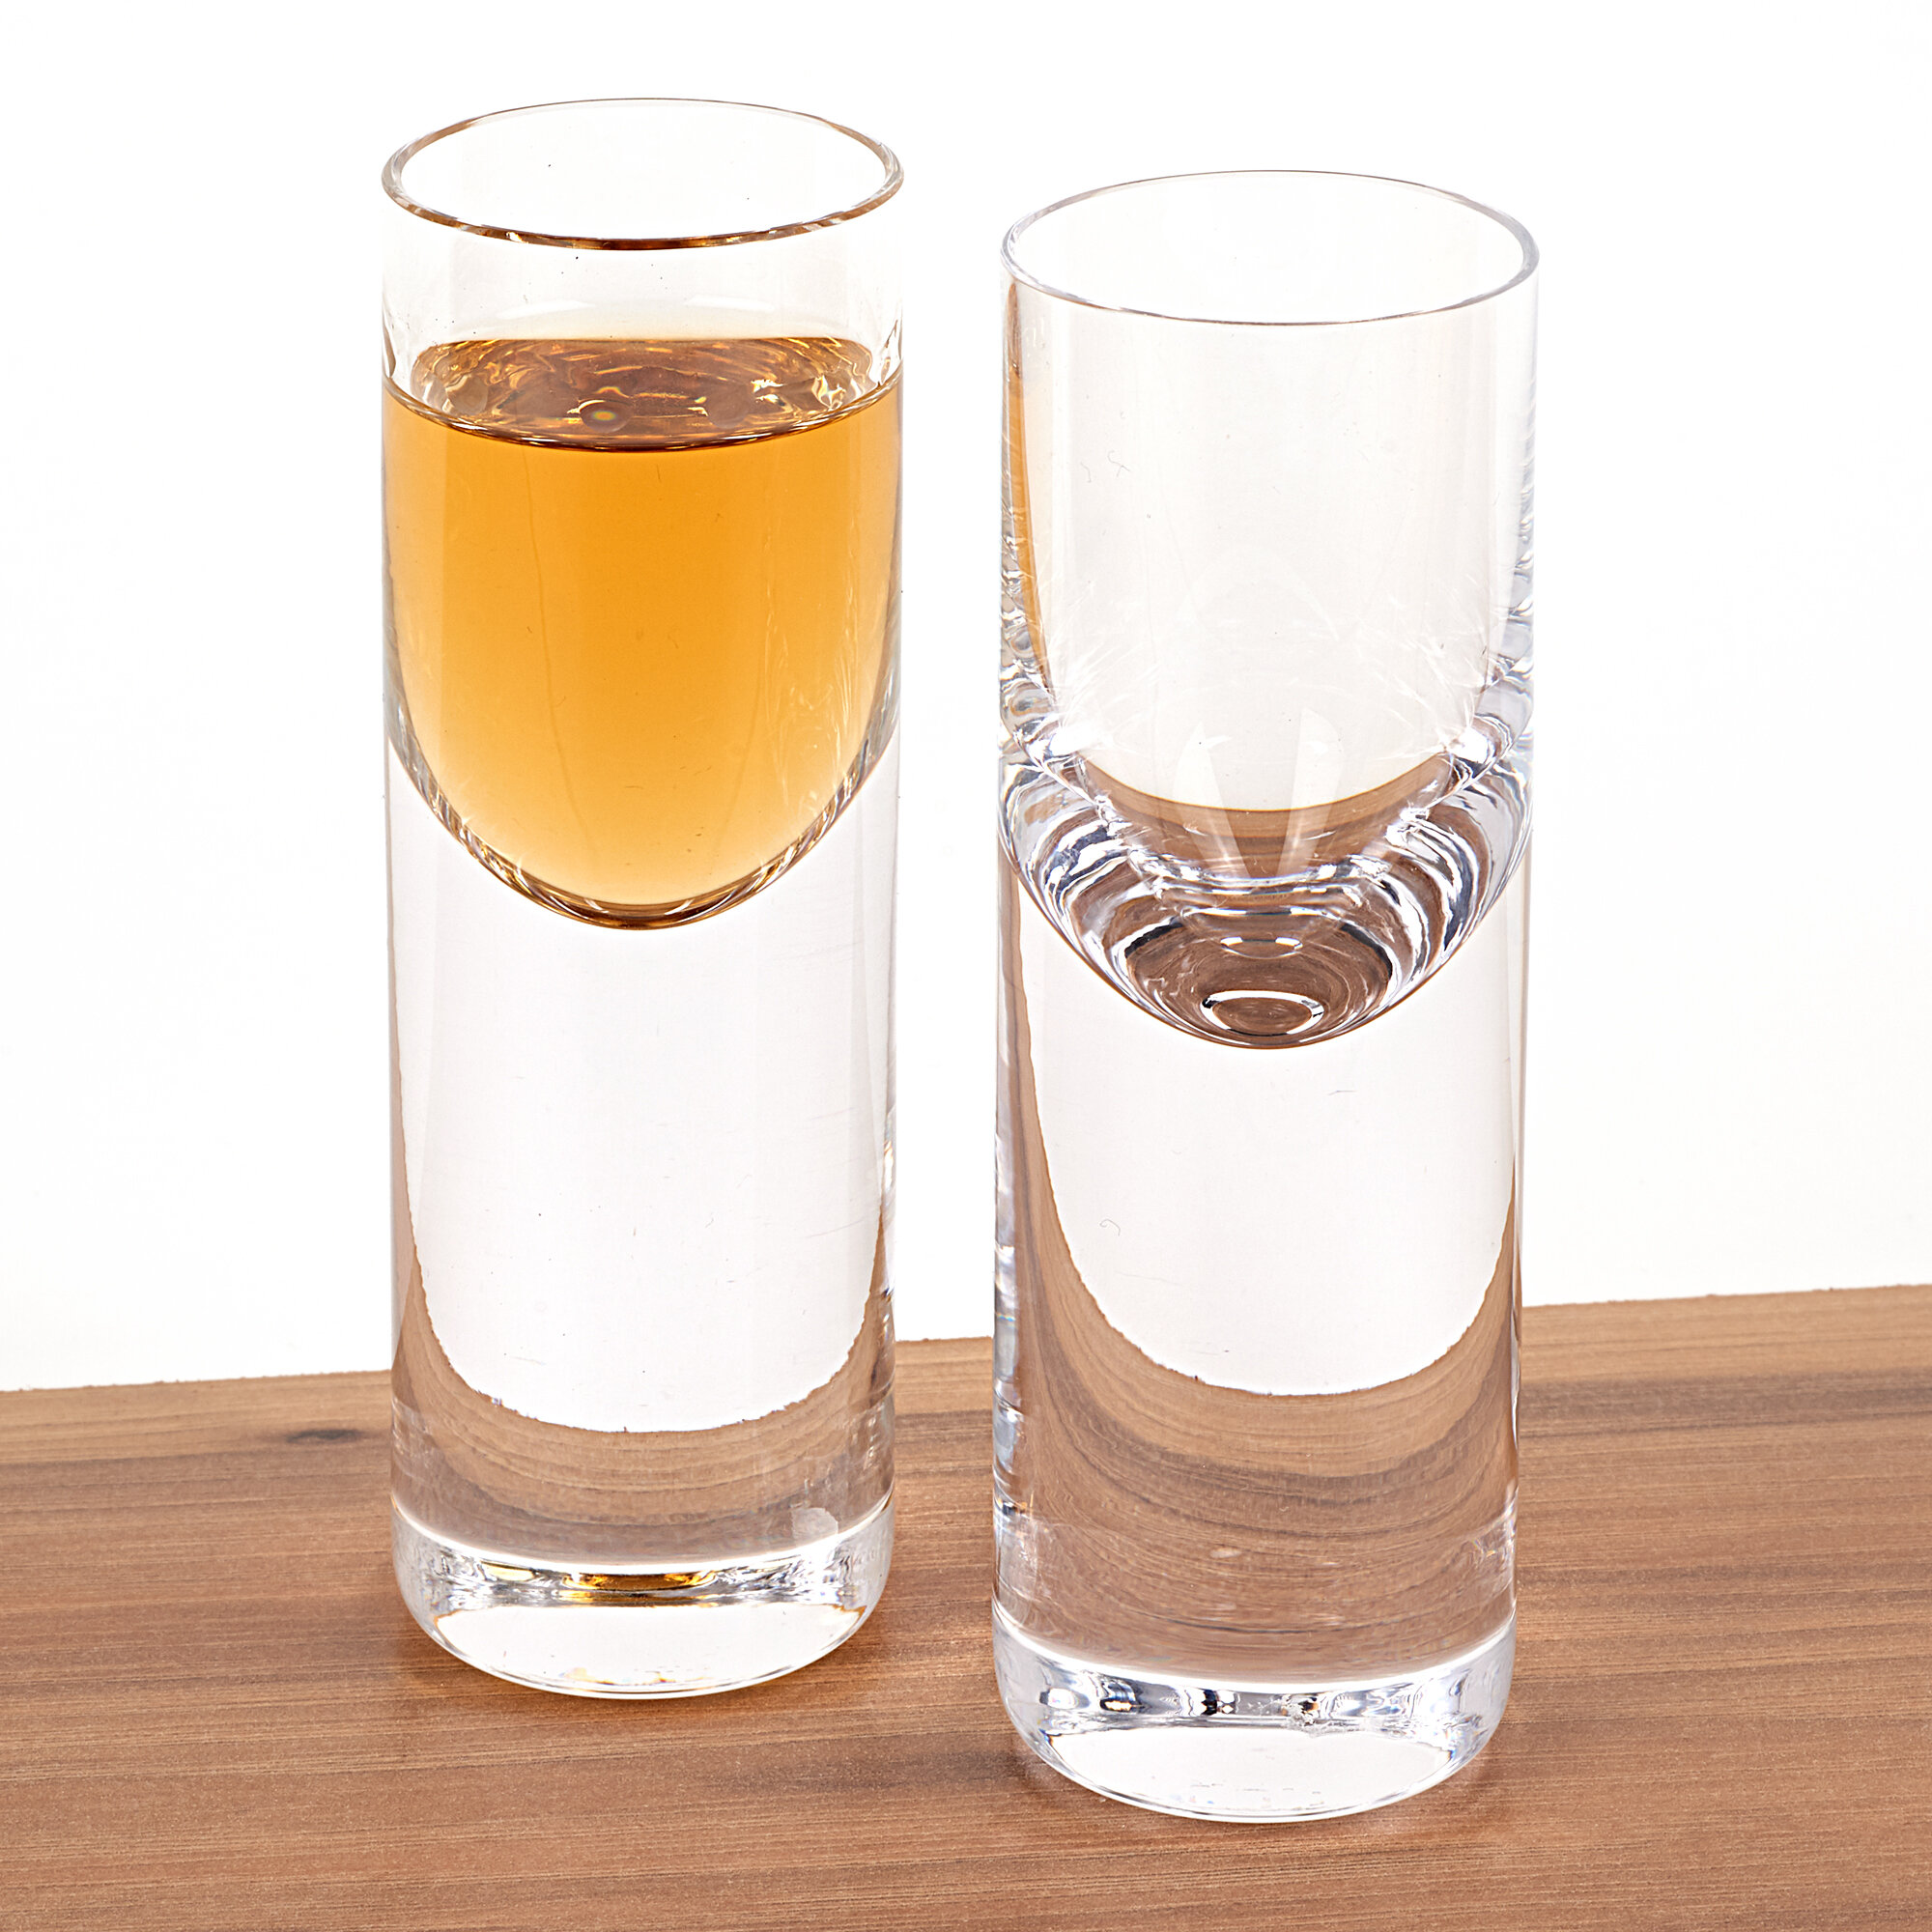 Orren Ellis Jaskier Premium Highball Glass Set - Elegant Tom Collins Glasses  Set Of 6 - 12oz Tall Drinking Water Glasses - Bar Glassware For Mojito,  Whiskey, Cocktail - Crystal High Ball